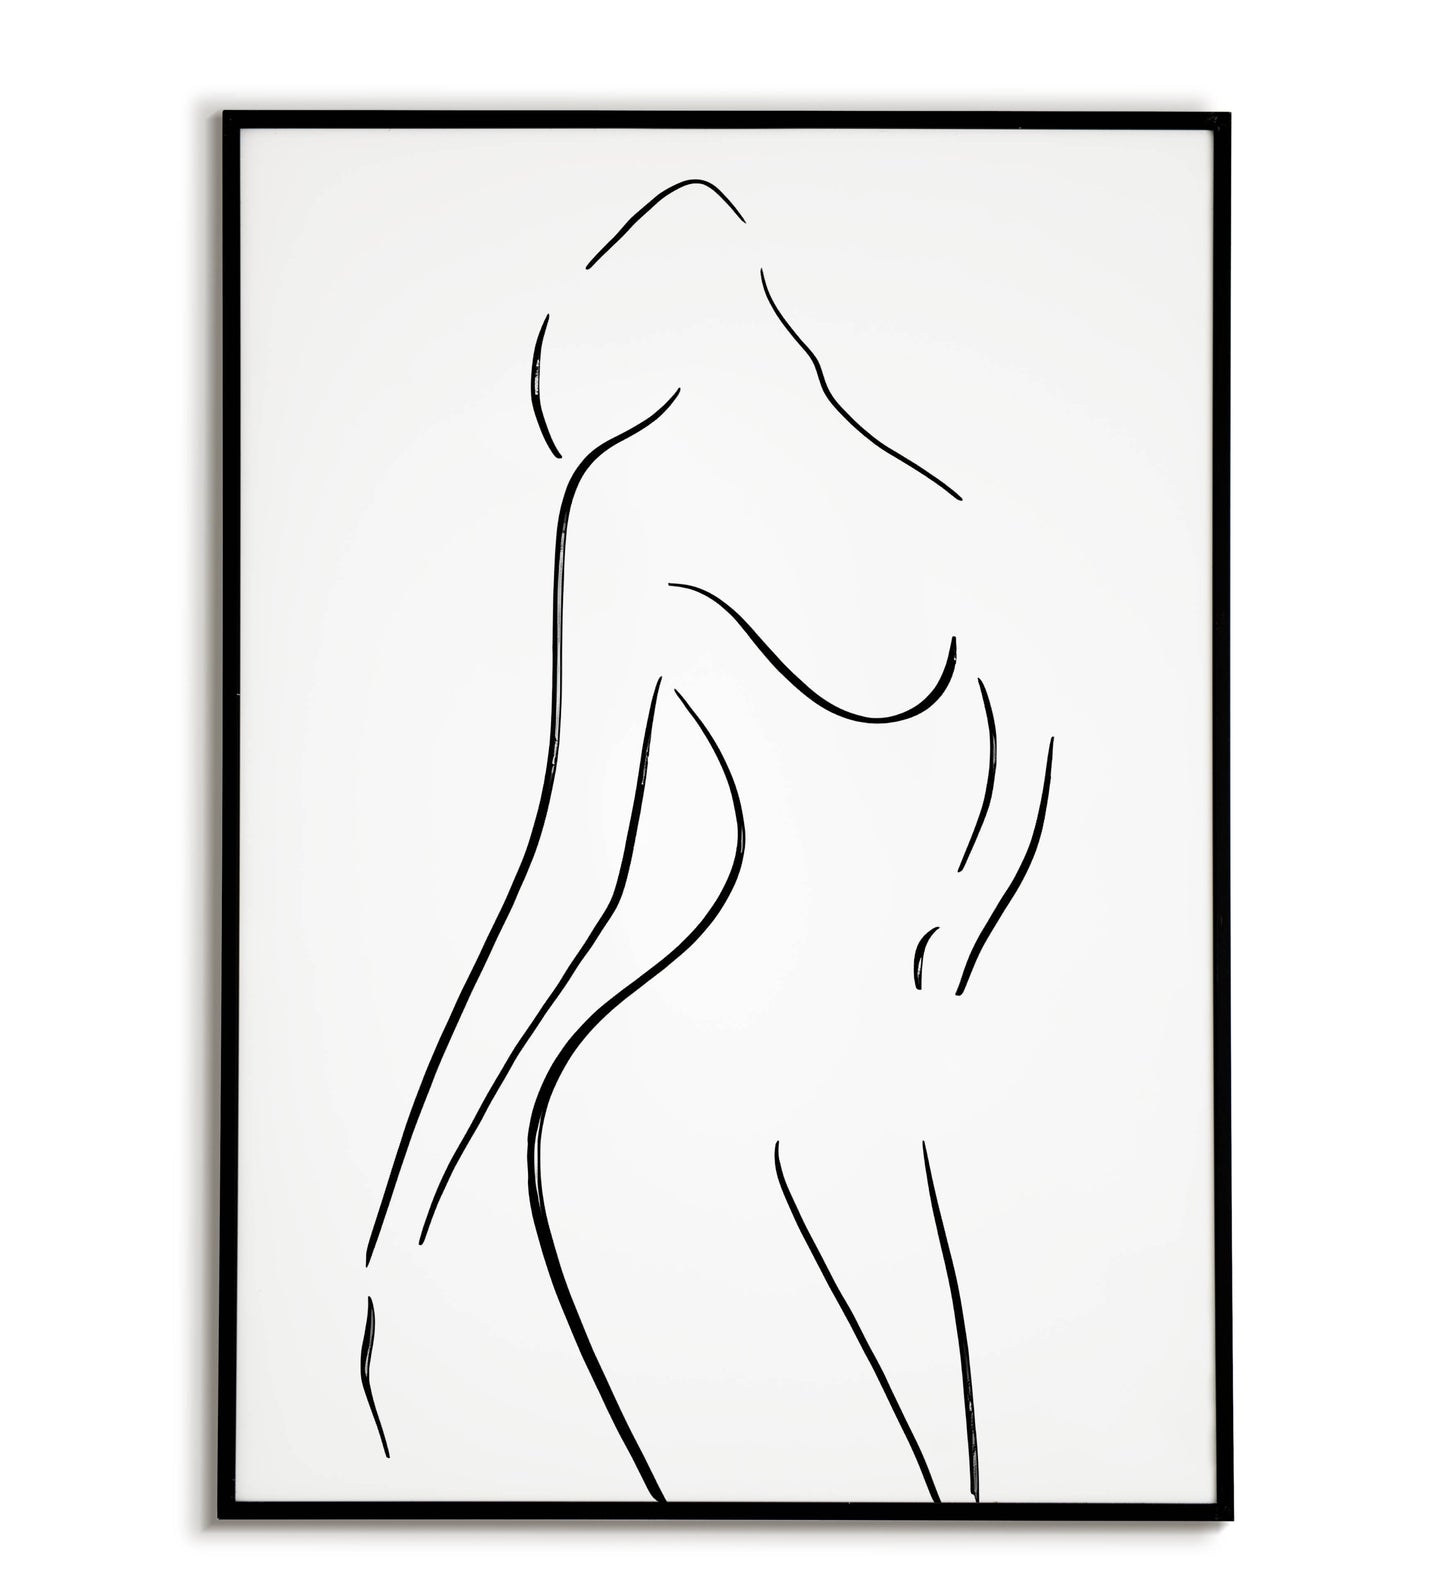 Nude woman line art